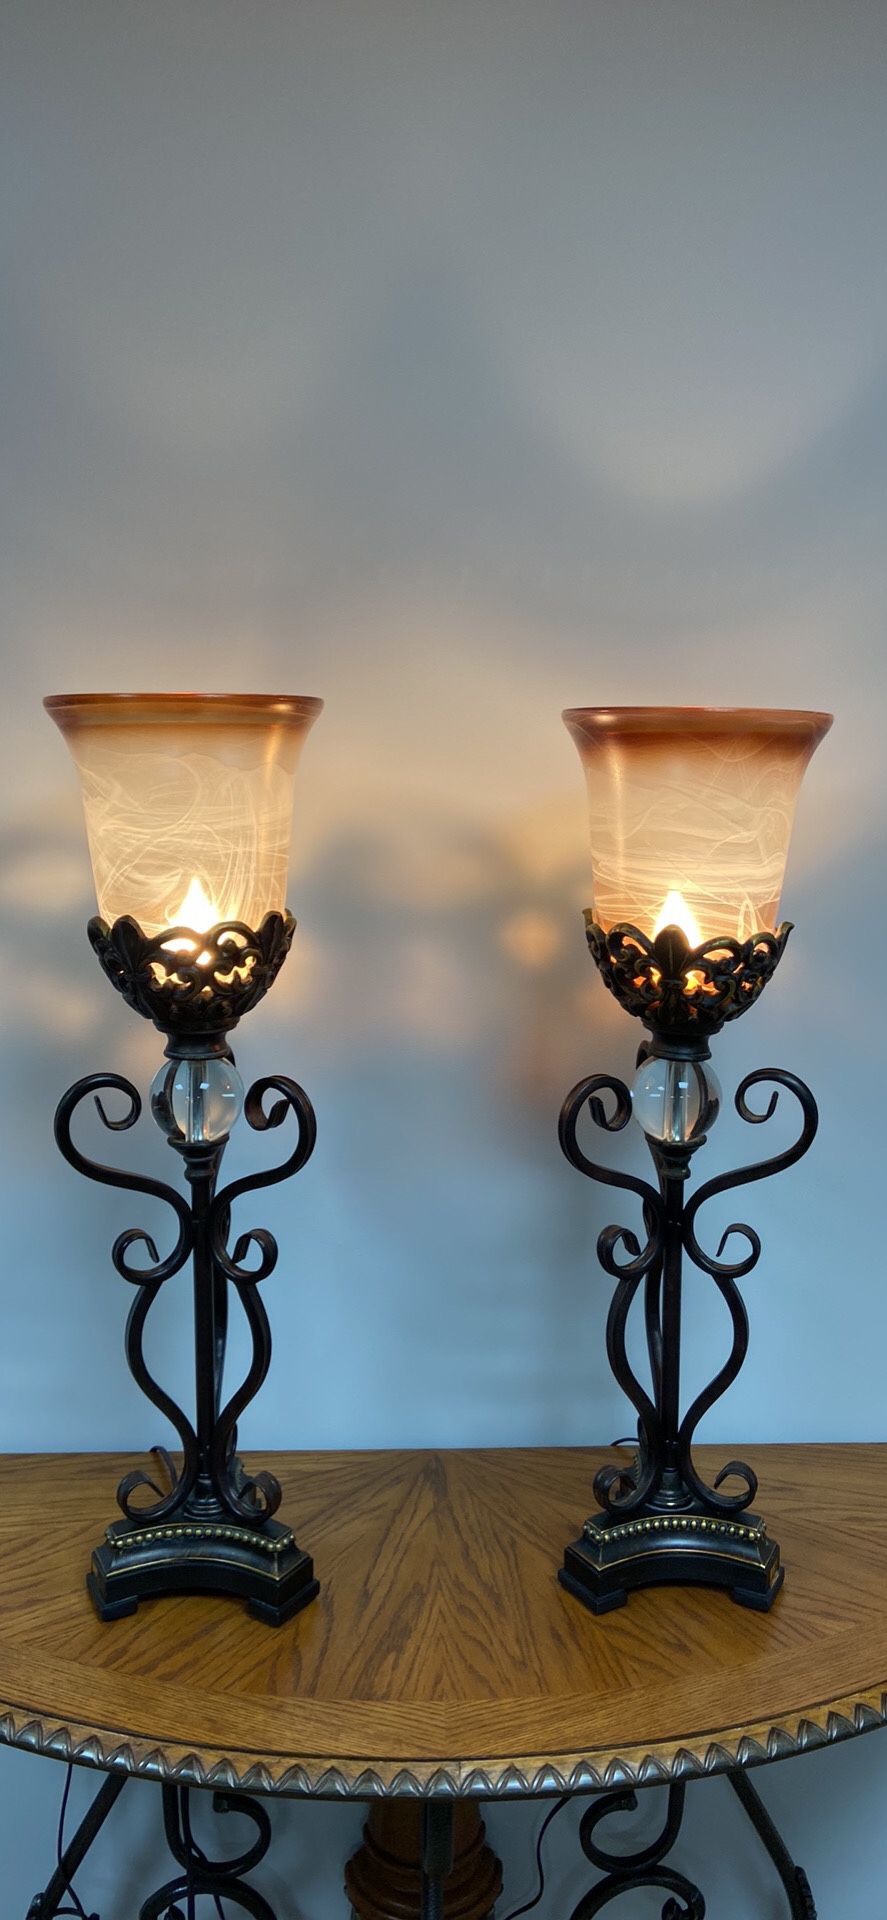 Two Beautiful Lamps